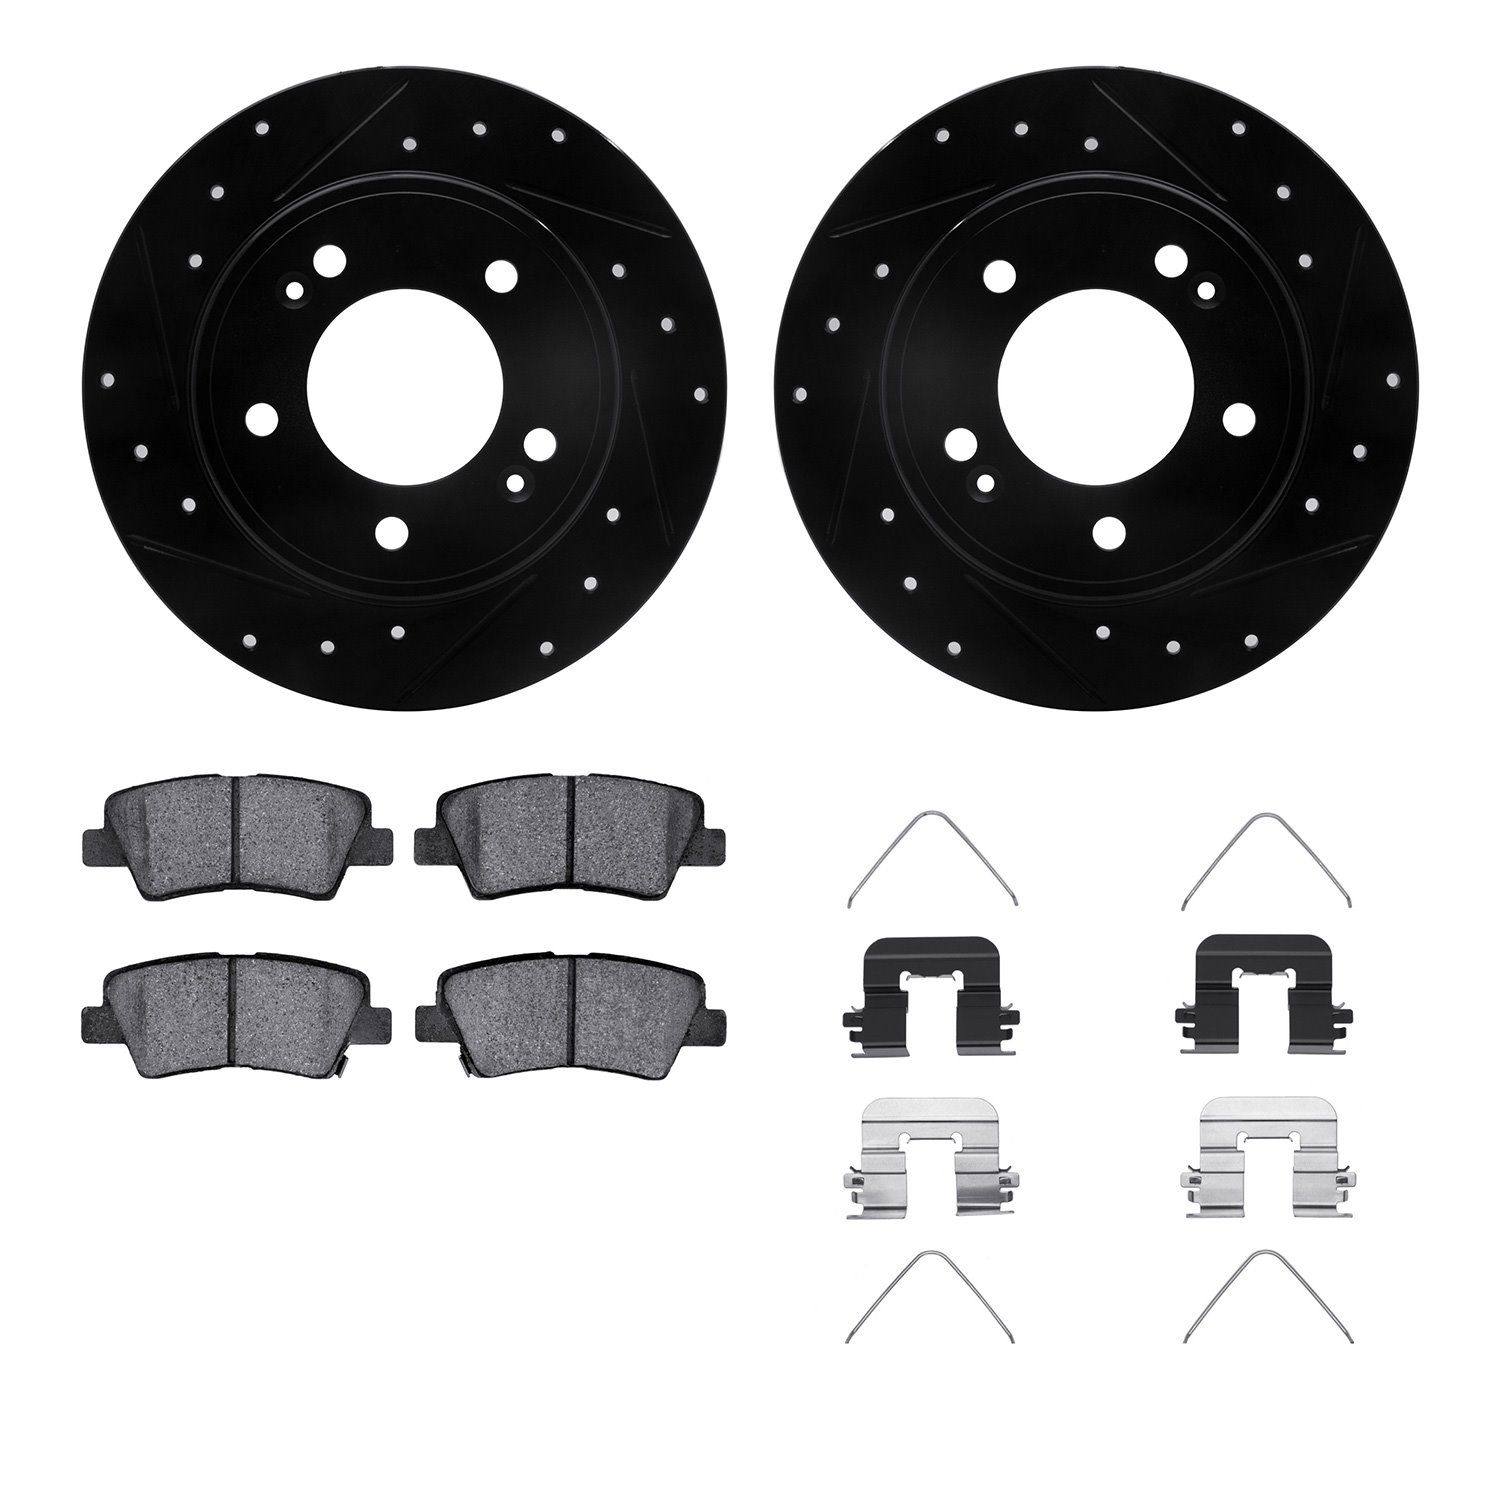 8312-03080 Drilled/Slotted Brake Rotors with 3000-Series Ceramic Brake Pads Kit & Hardware [Black], Fits Select Kia/Hyundai/Gene